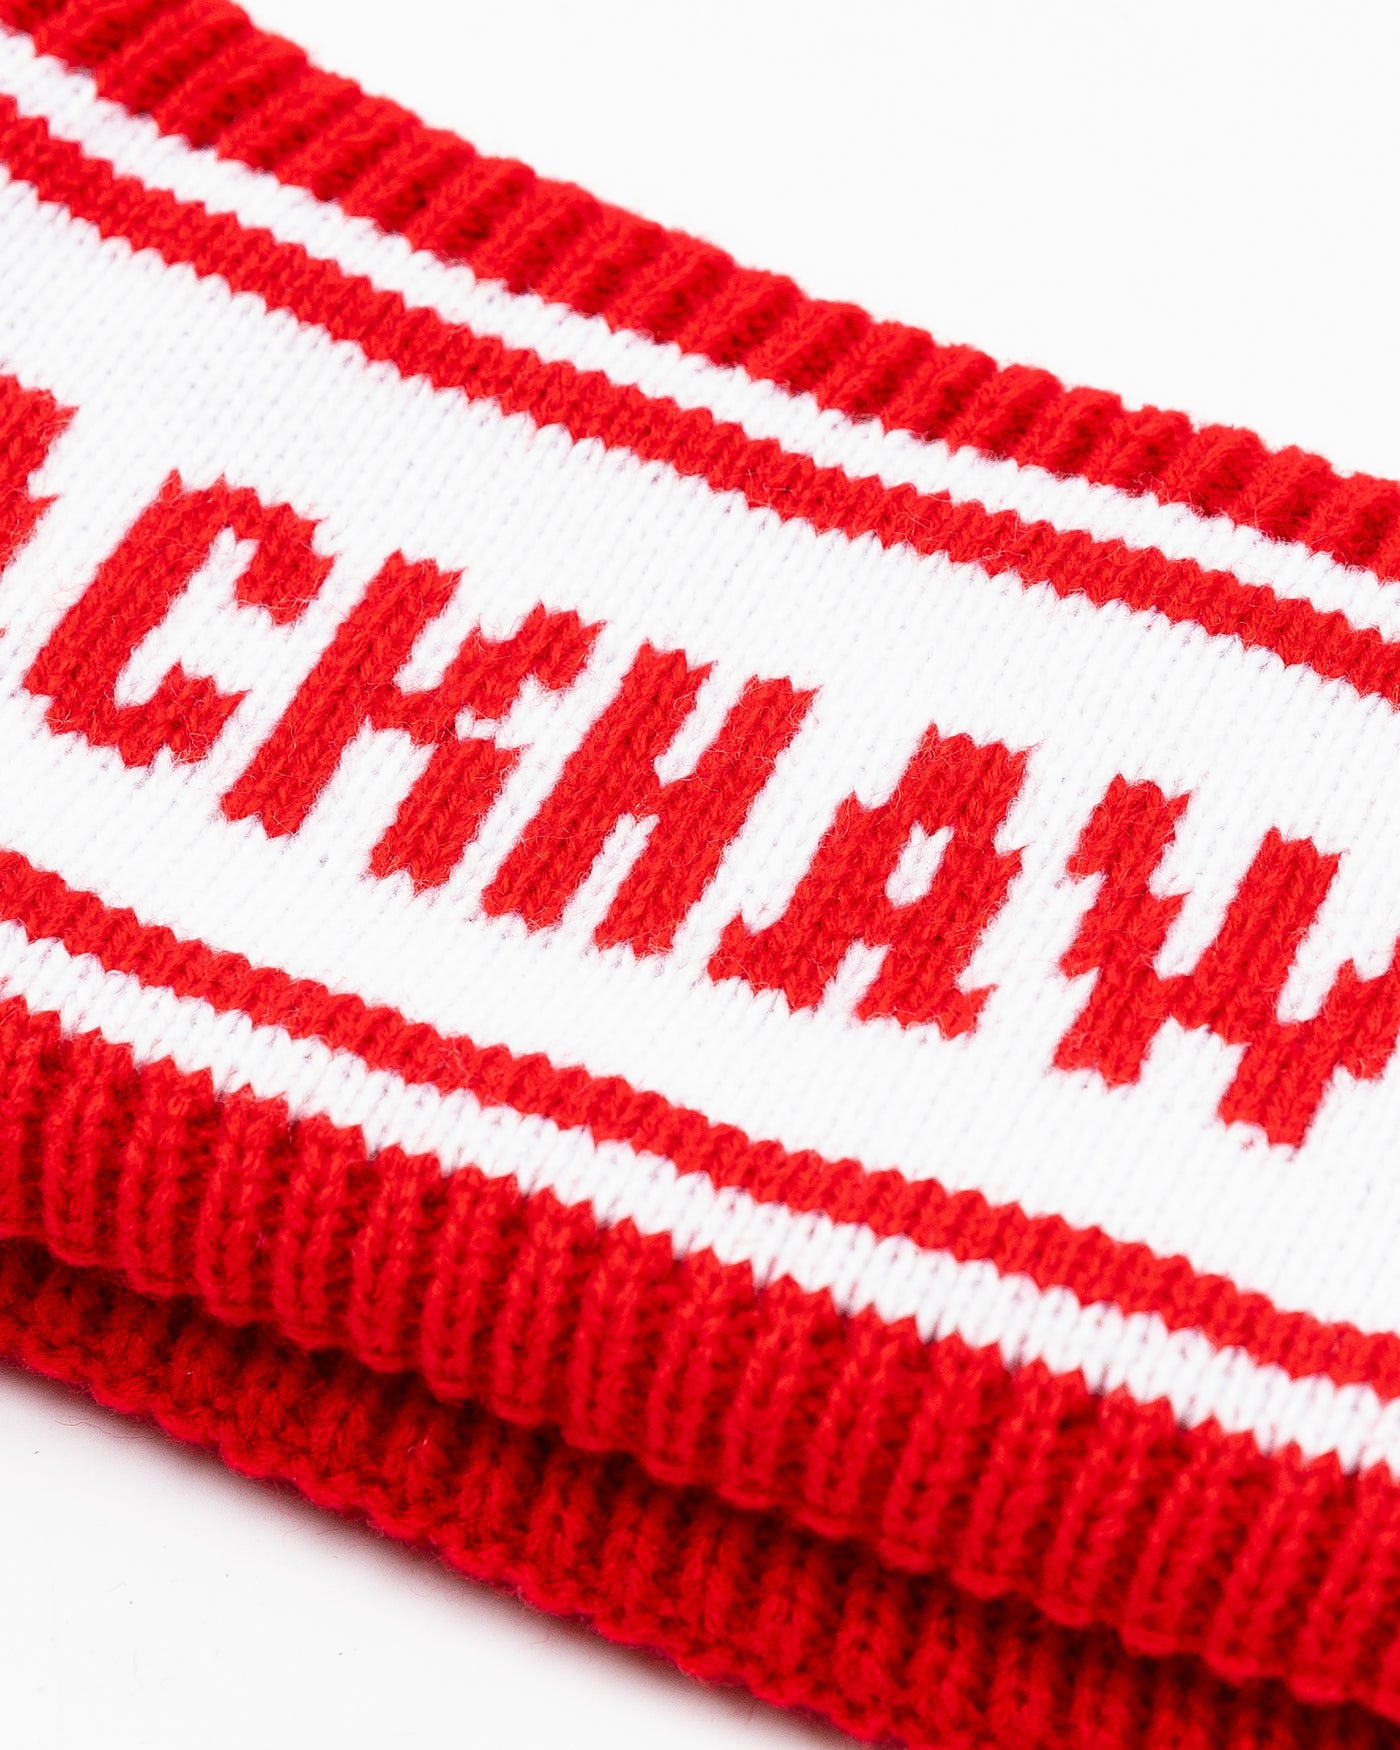 red and white Zoozatz knit headband with Chicago Blackhawks wordmark - detail lay flat